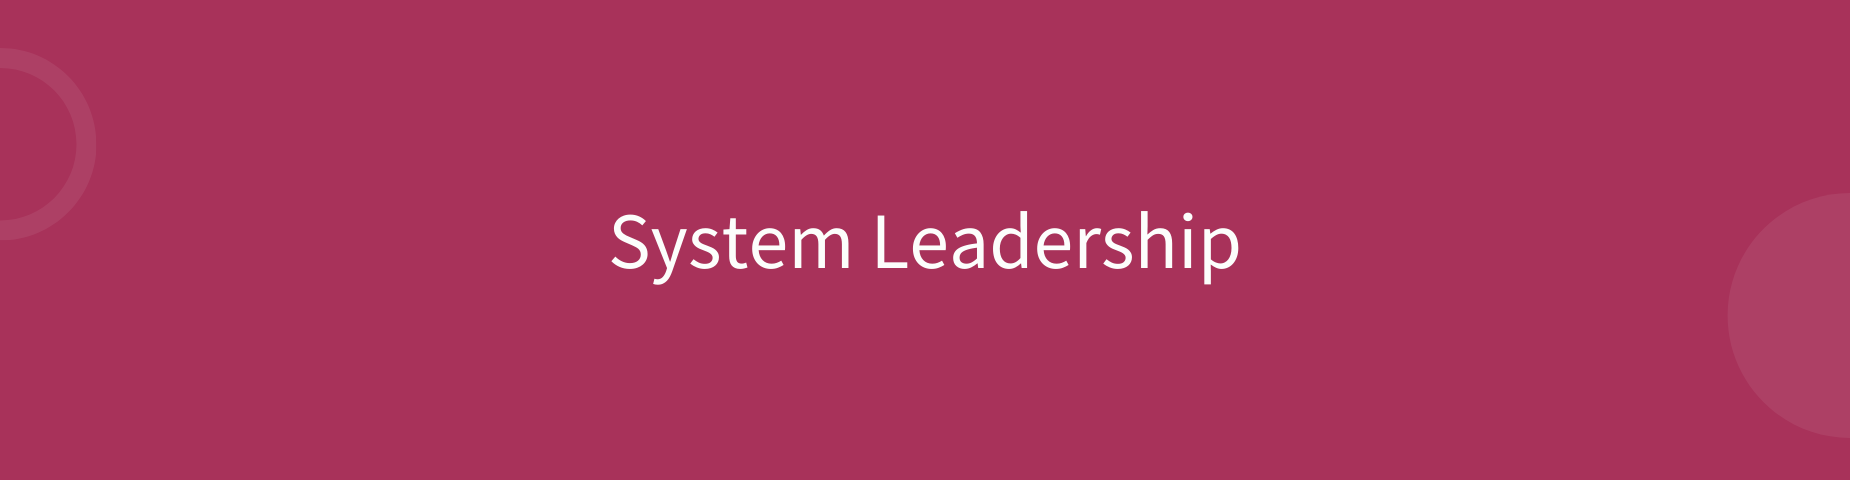 System Leadership Header English